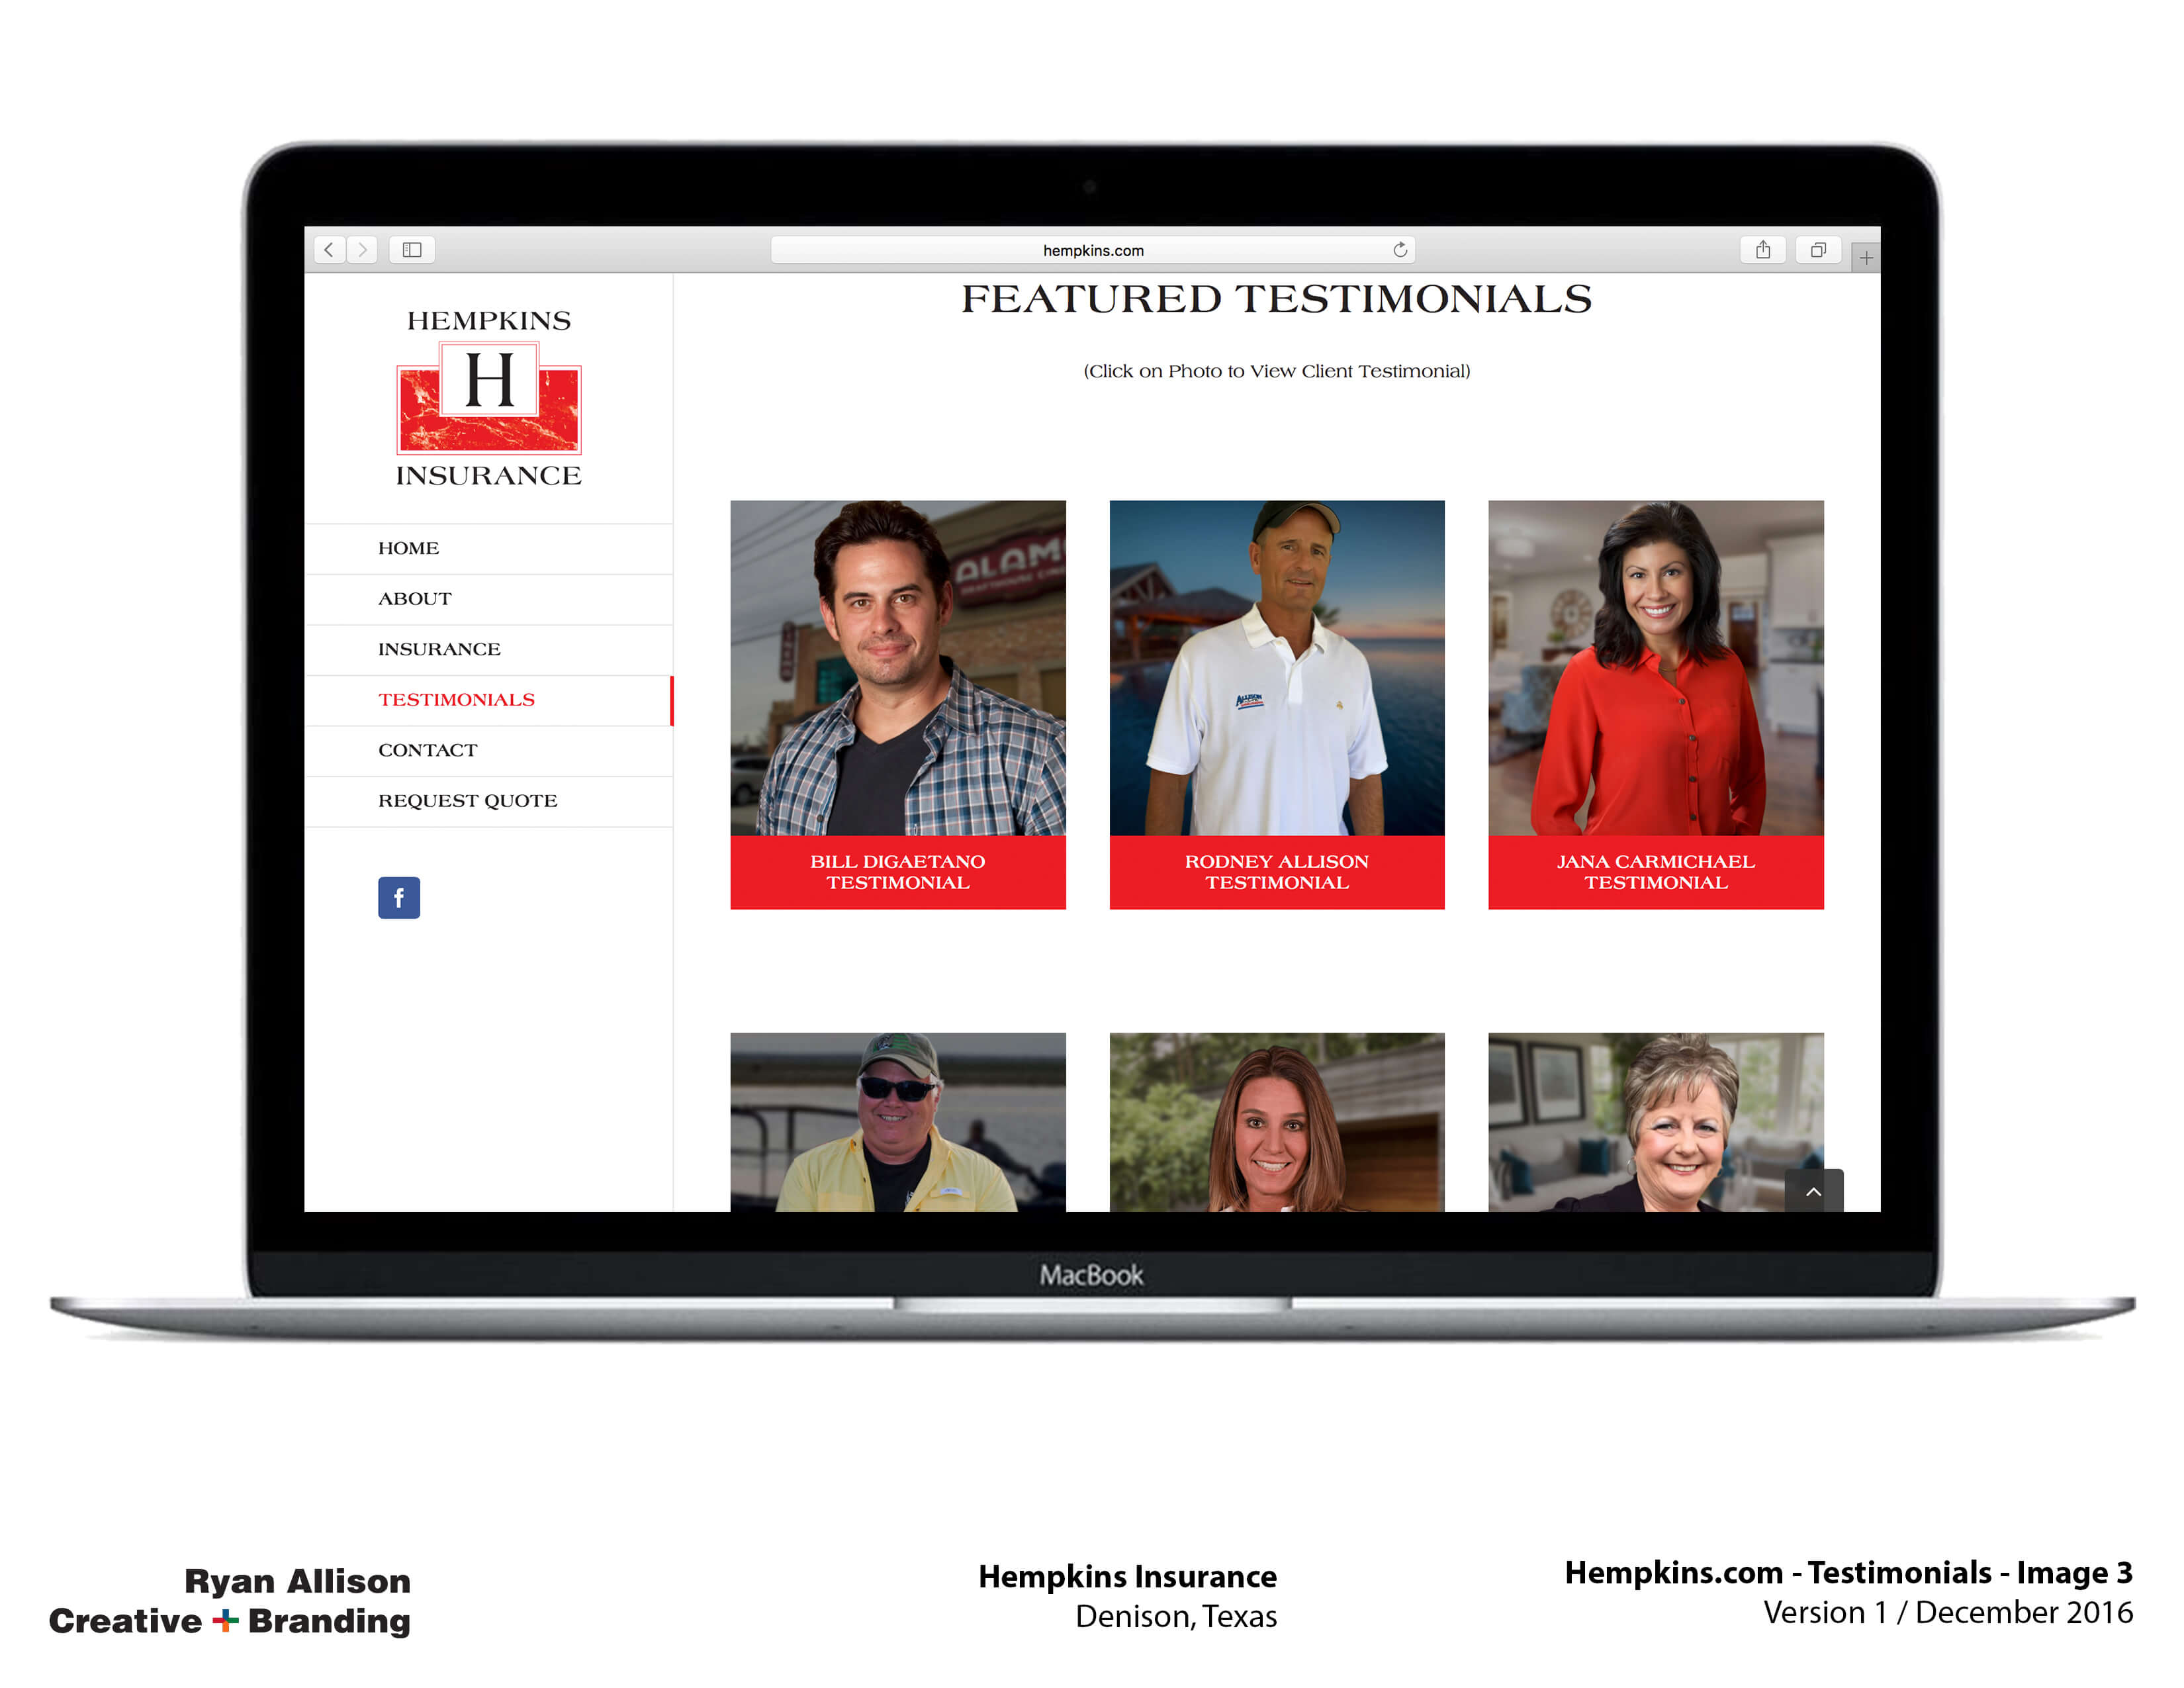 Hempkins Insurance Website Testimonials 3 - Project - Ryan Allison Creative + Branding